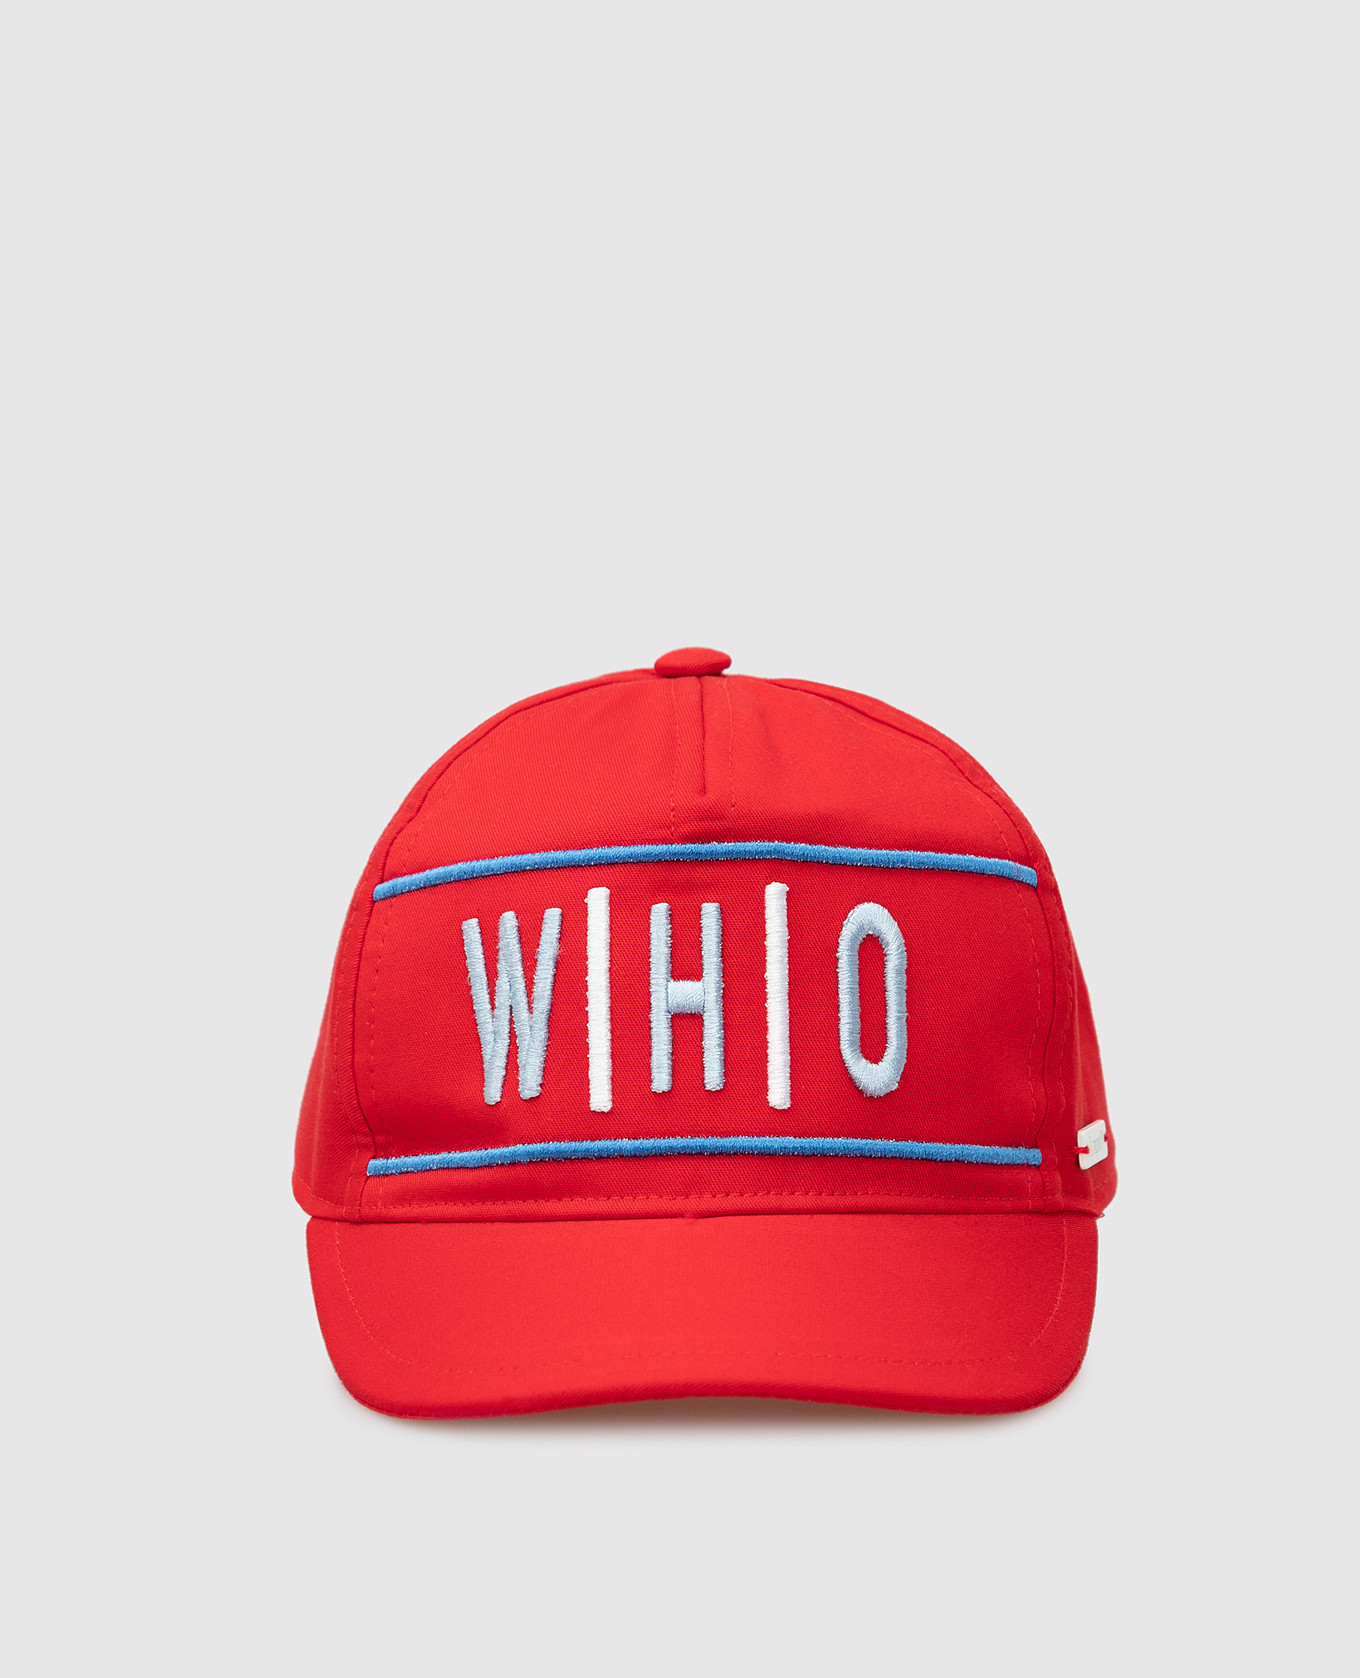 Children's red cap